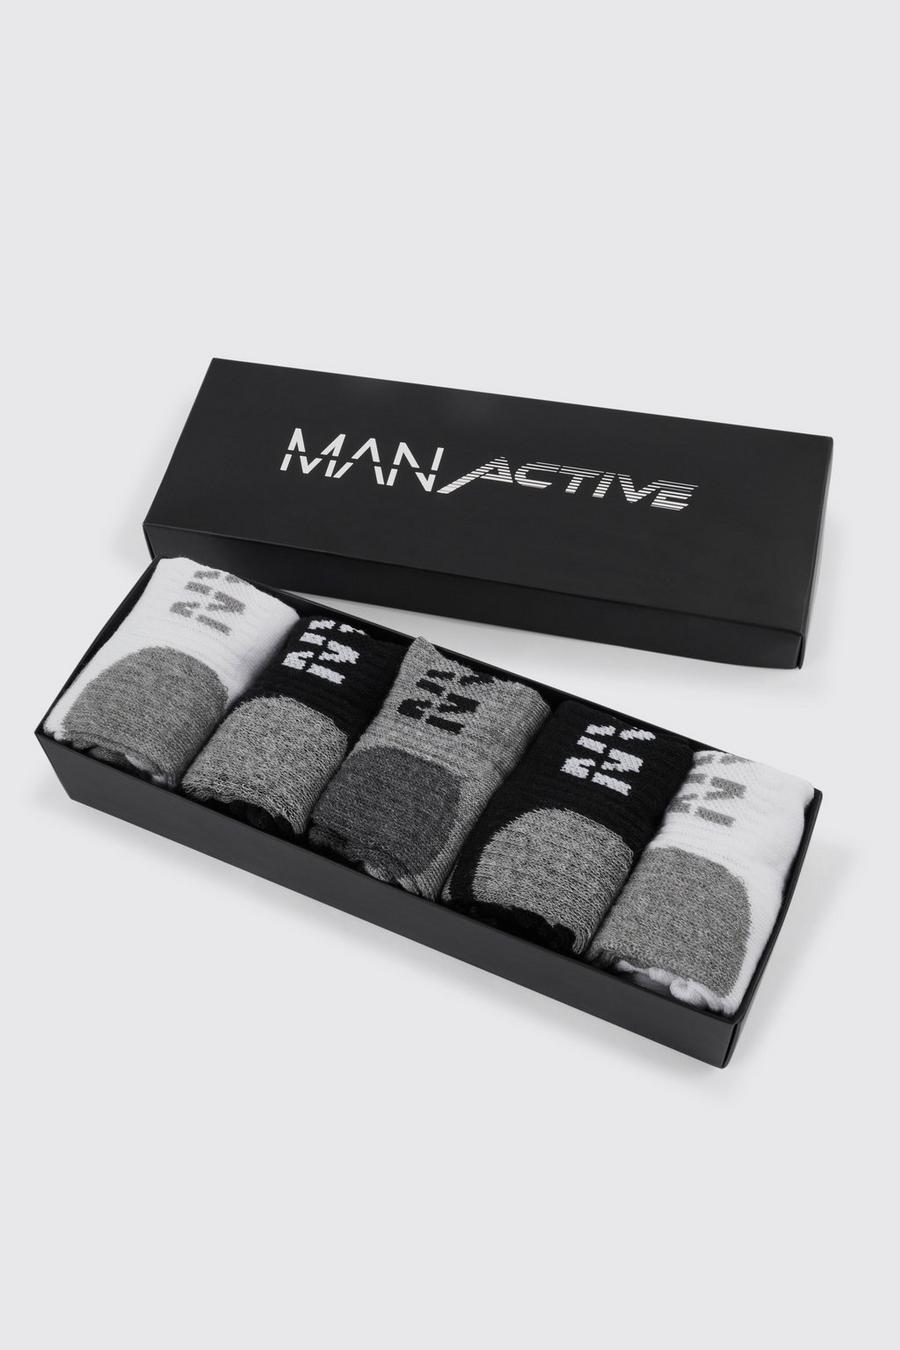 Multi Man Active 5 Pack Gift Boxed Trainer Socks